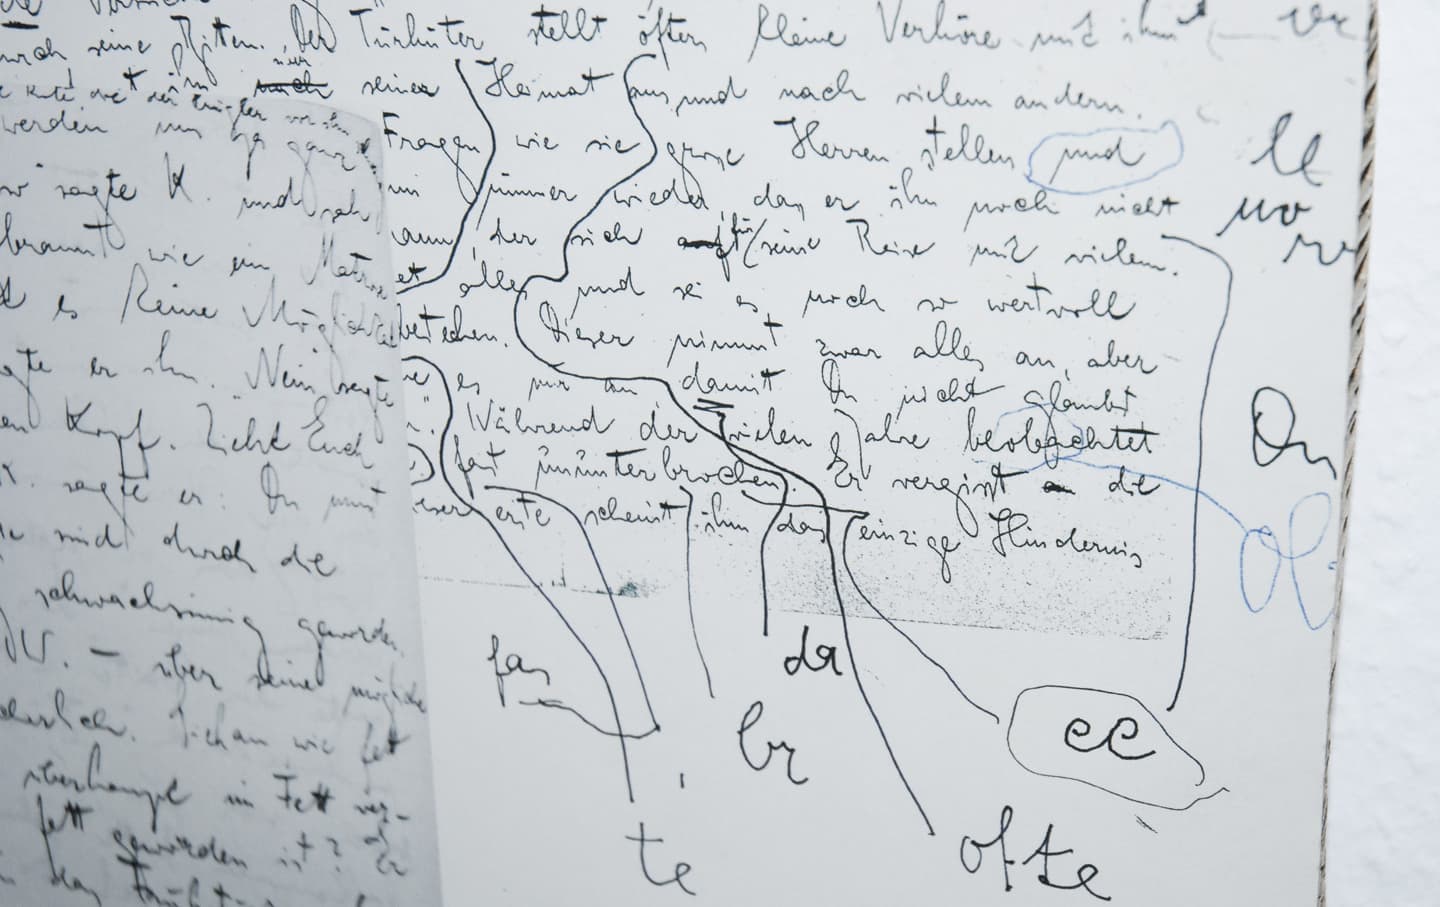 Working with Franz Kafka’s manuscripts.